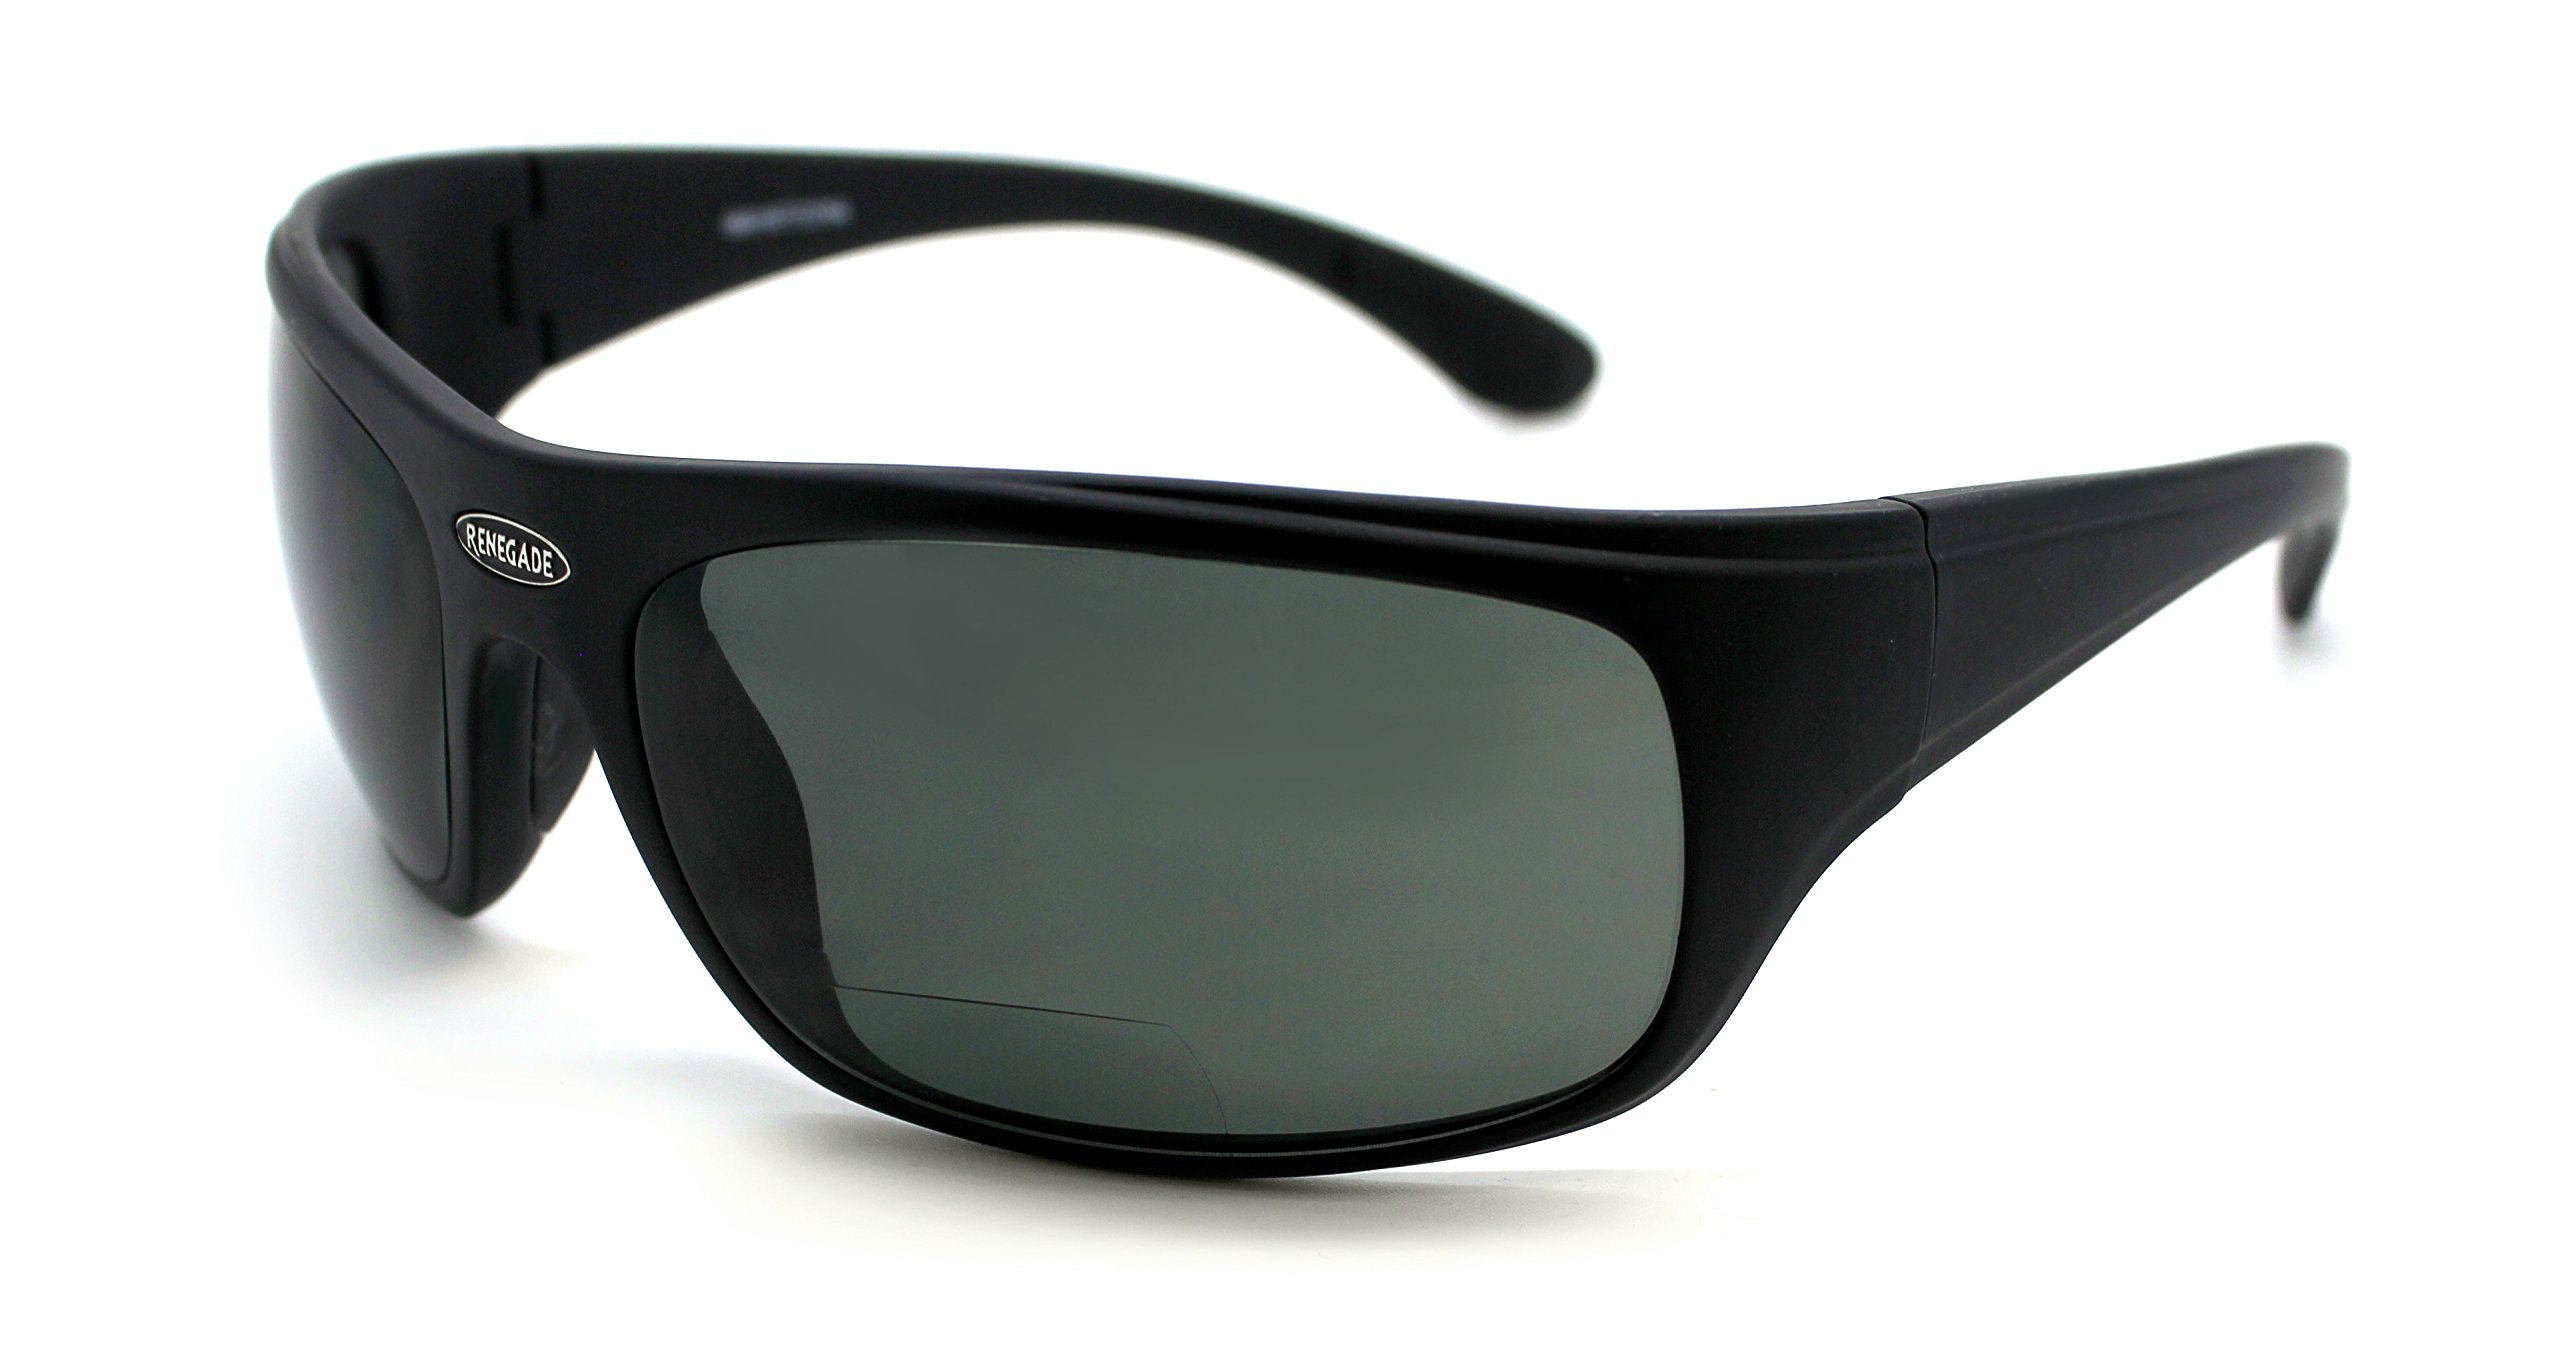 RENEGADE Patented Bifocal Polarized Reader Half Rim Men's Fishing Sunglasses  100% UV Protection with Microfiber Bag Matte Black Frame, Grey Lens -  600882 Bifocal +1.50